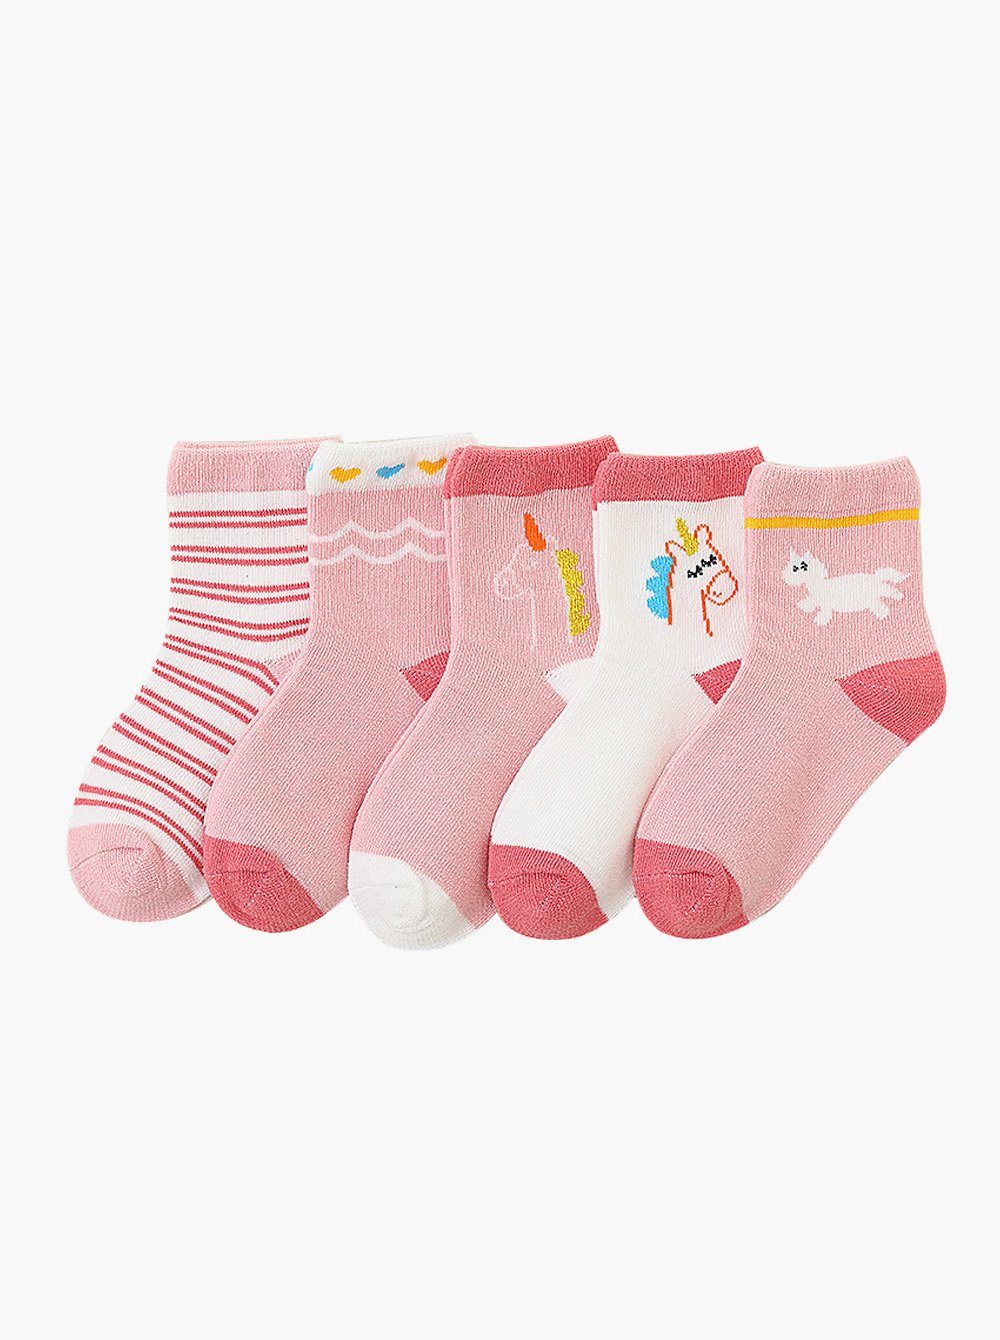 axy Langsocken axy Kinder Socken 5 Paar Multipack Mädchen Kindersocken (5er Pack) Geschenke Bunte Weich Kindersocken Einhorn | Wintersocken